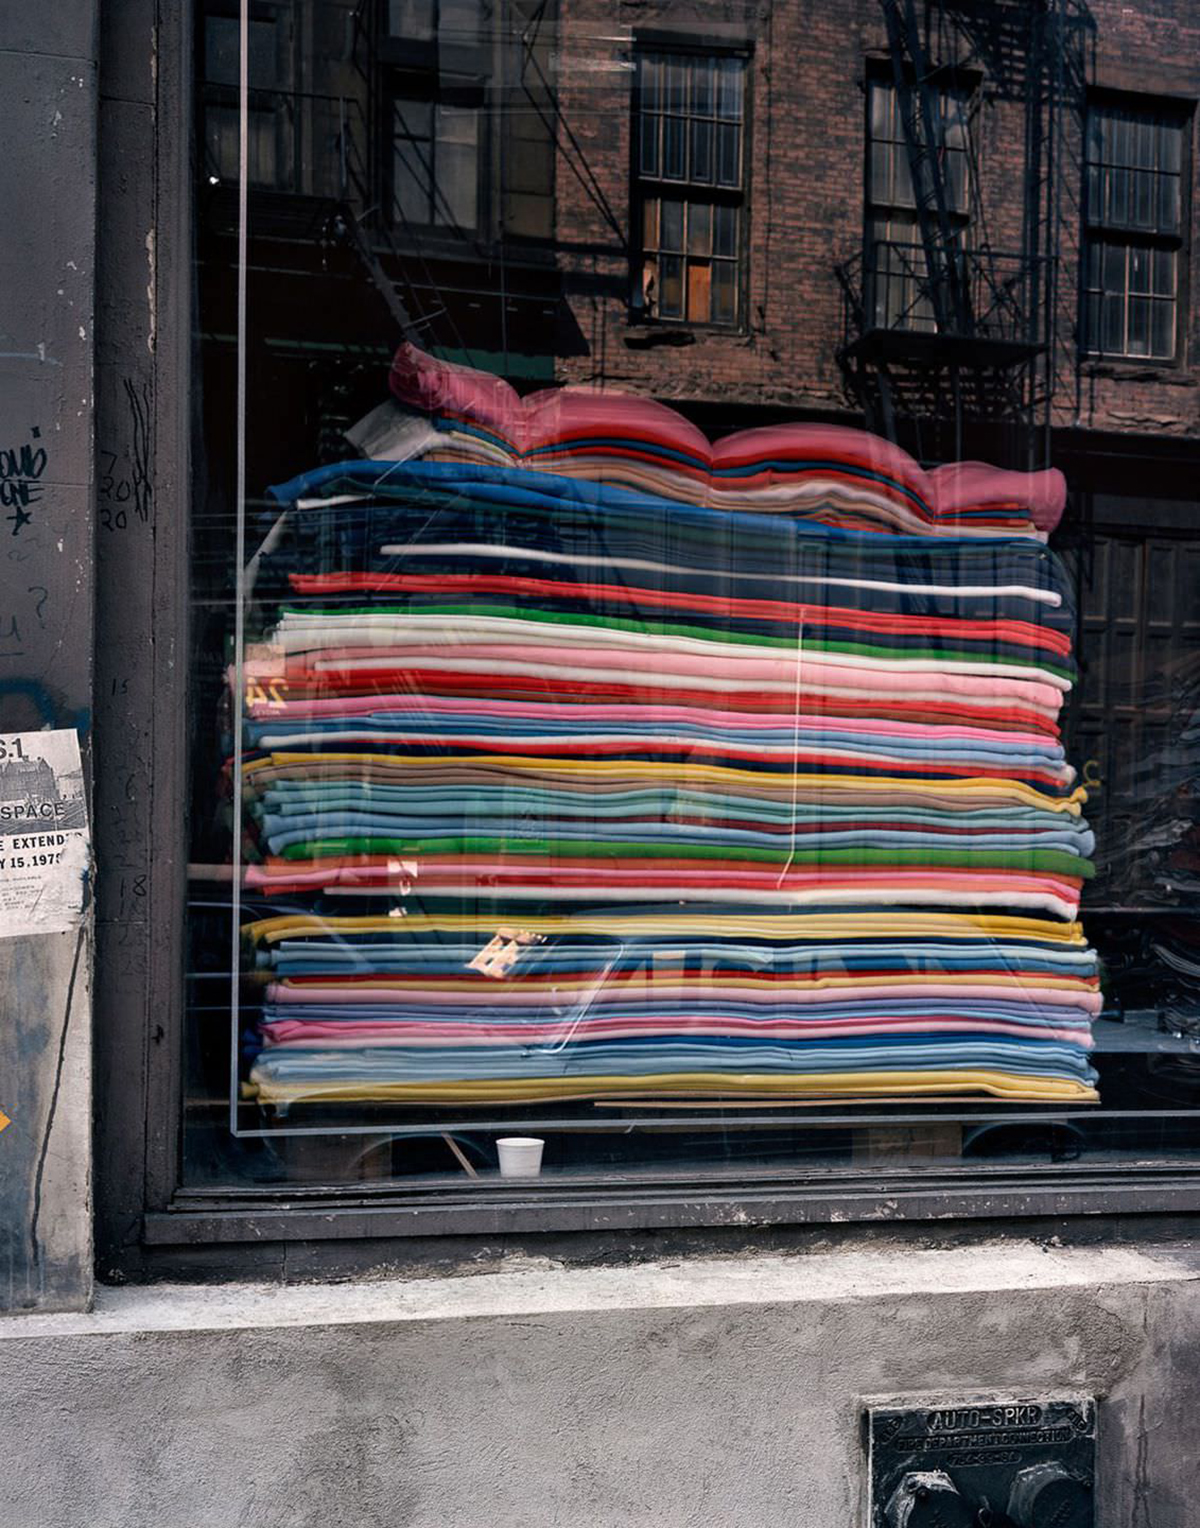 1986 Blankets, New York